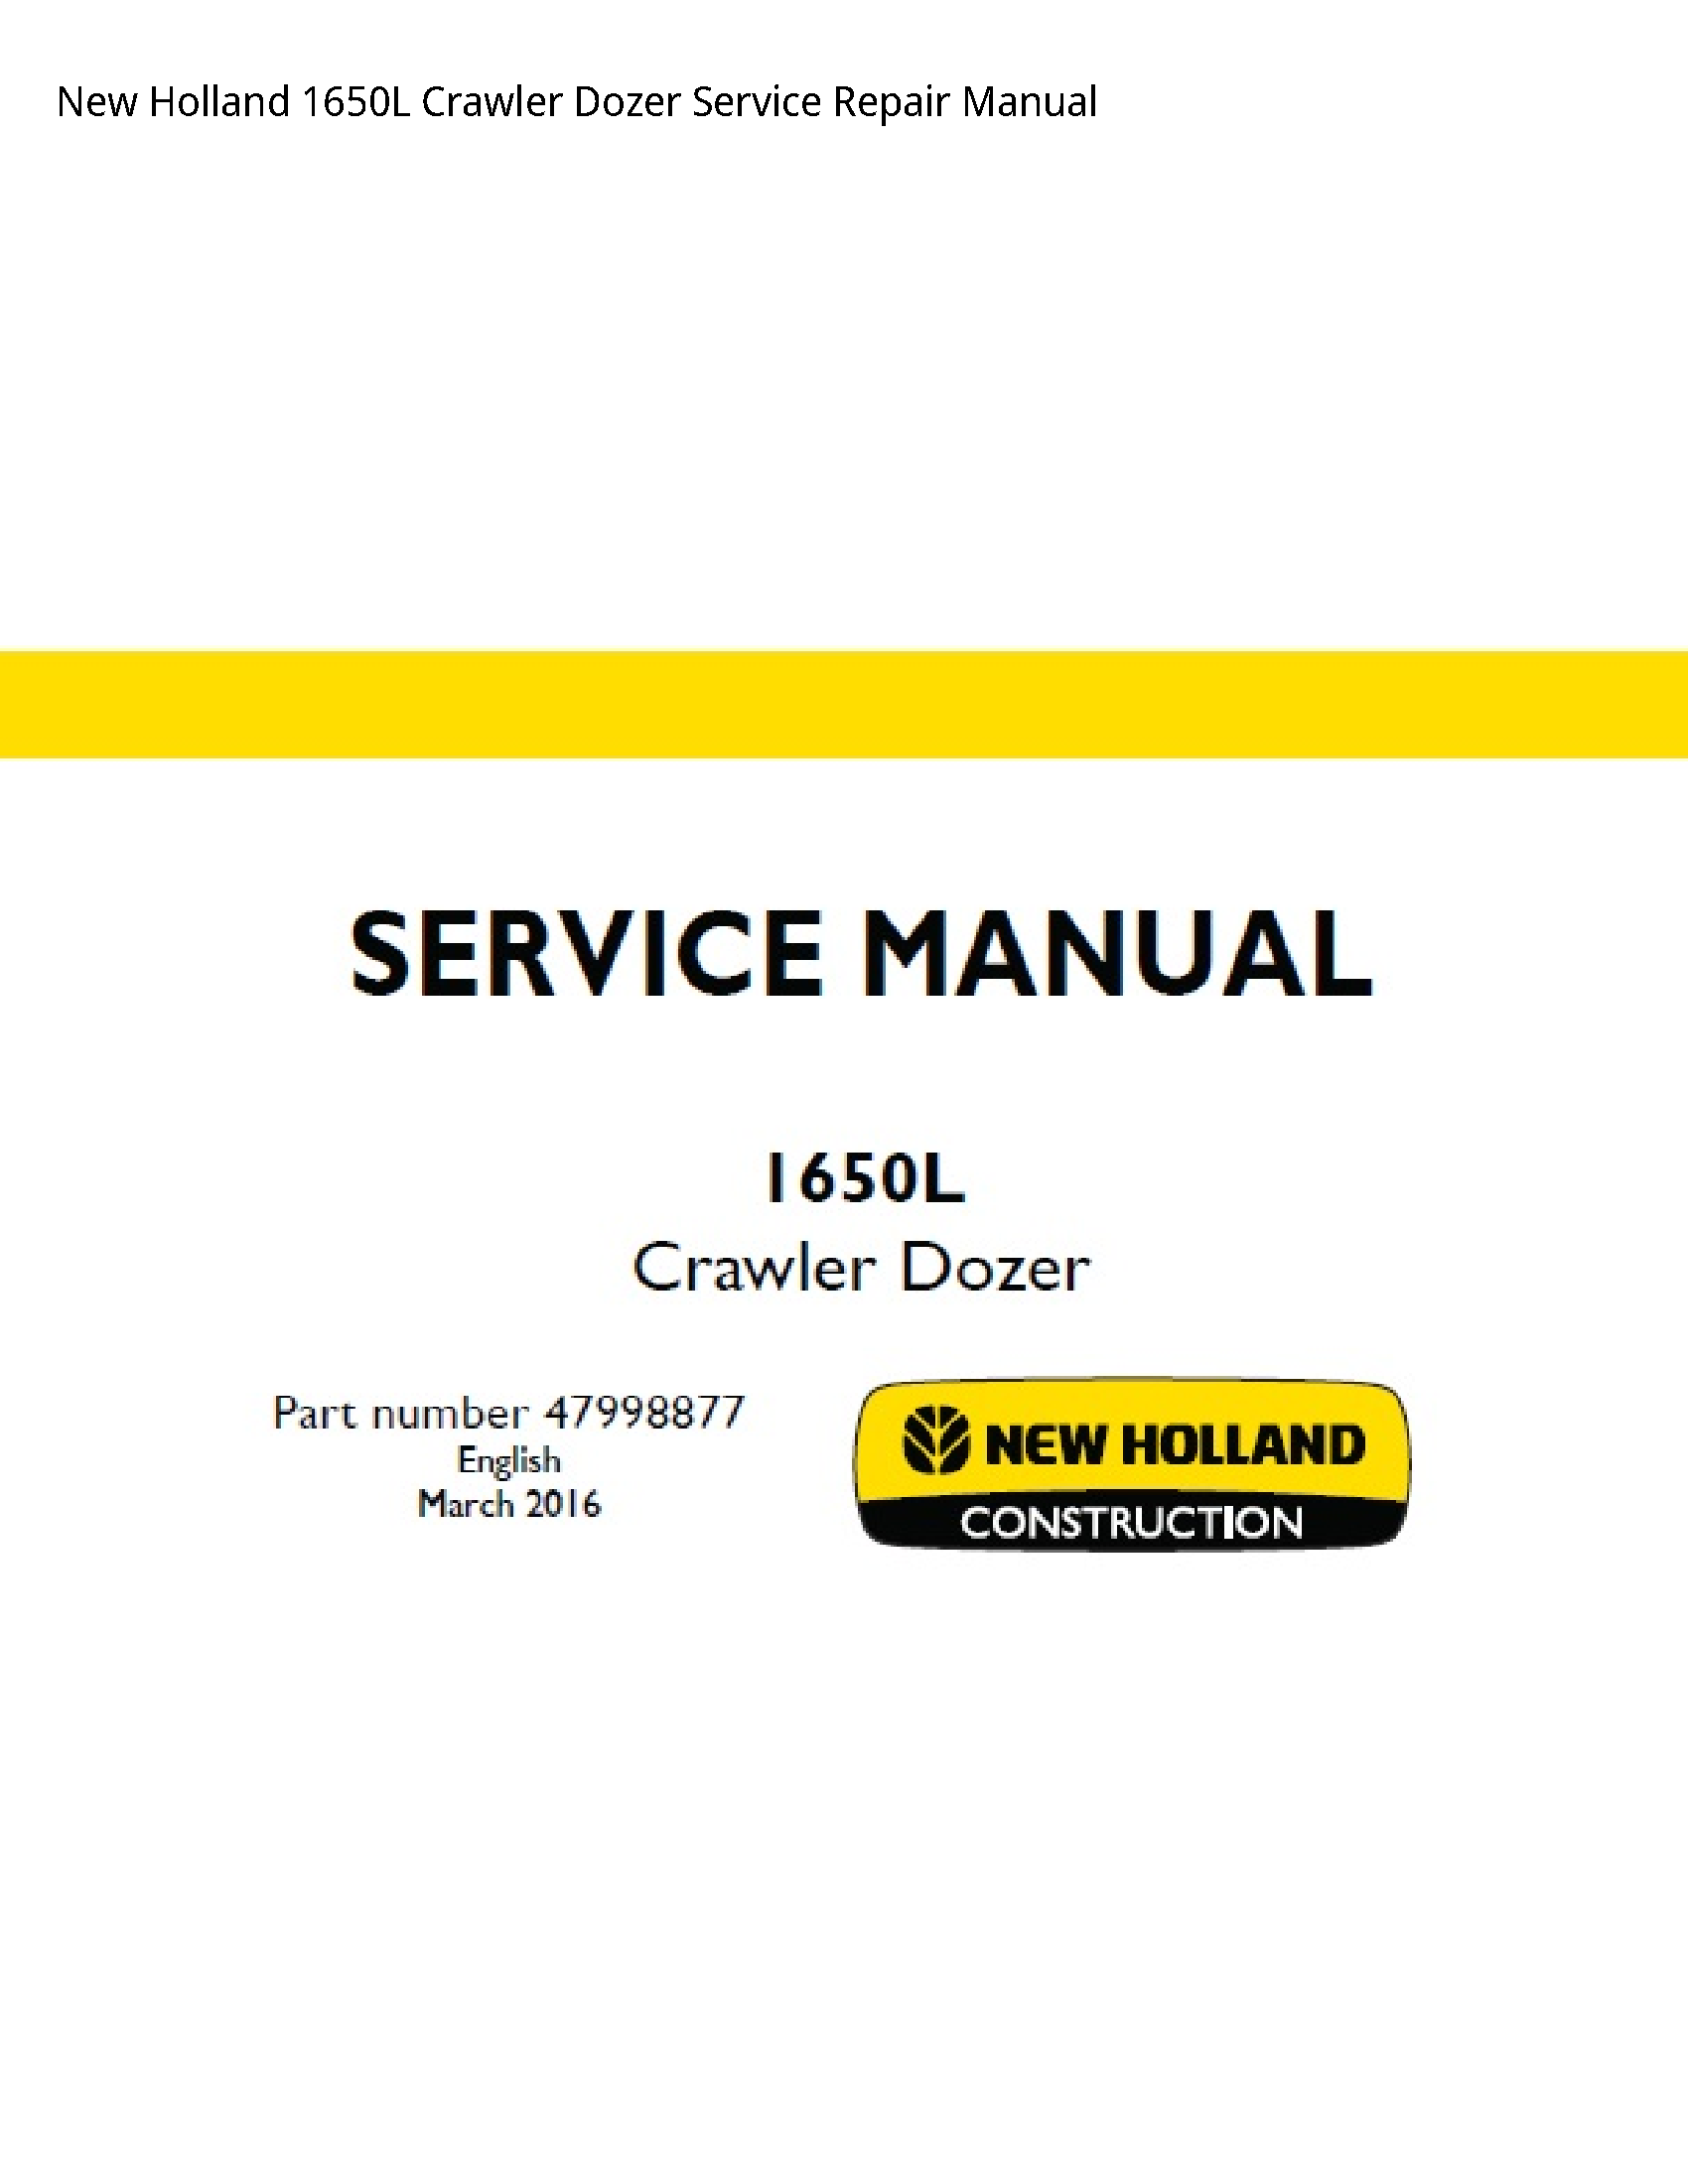 New Holland 1650L Crawler Dozer manual